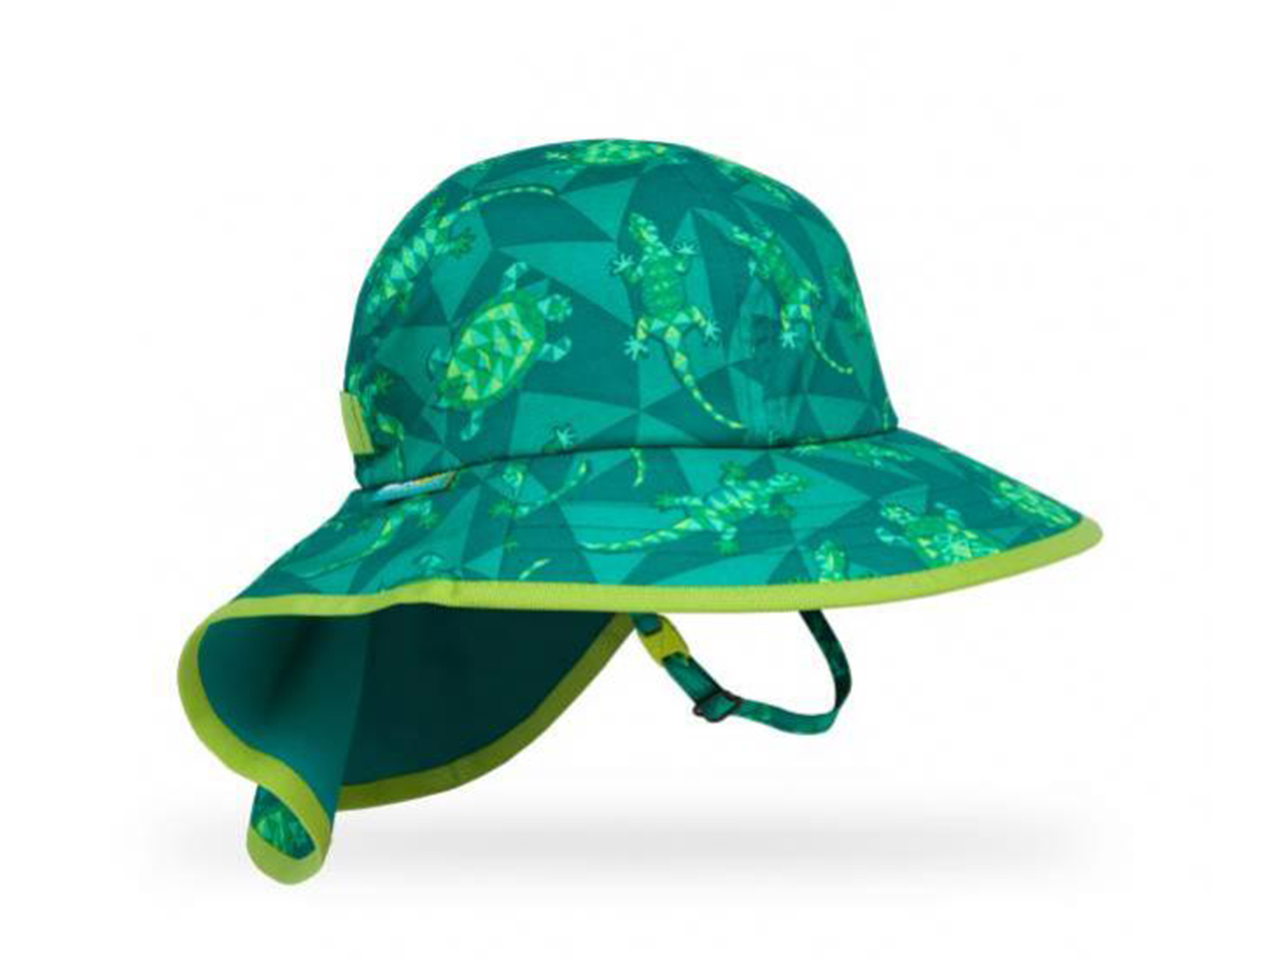 Taiduosheng Kids Girls Sun Hat UV Sun Protection Hats Breathable Boys Summer Play Outdoor Sport Hat 